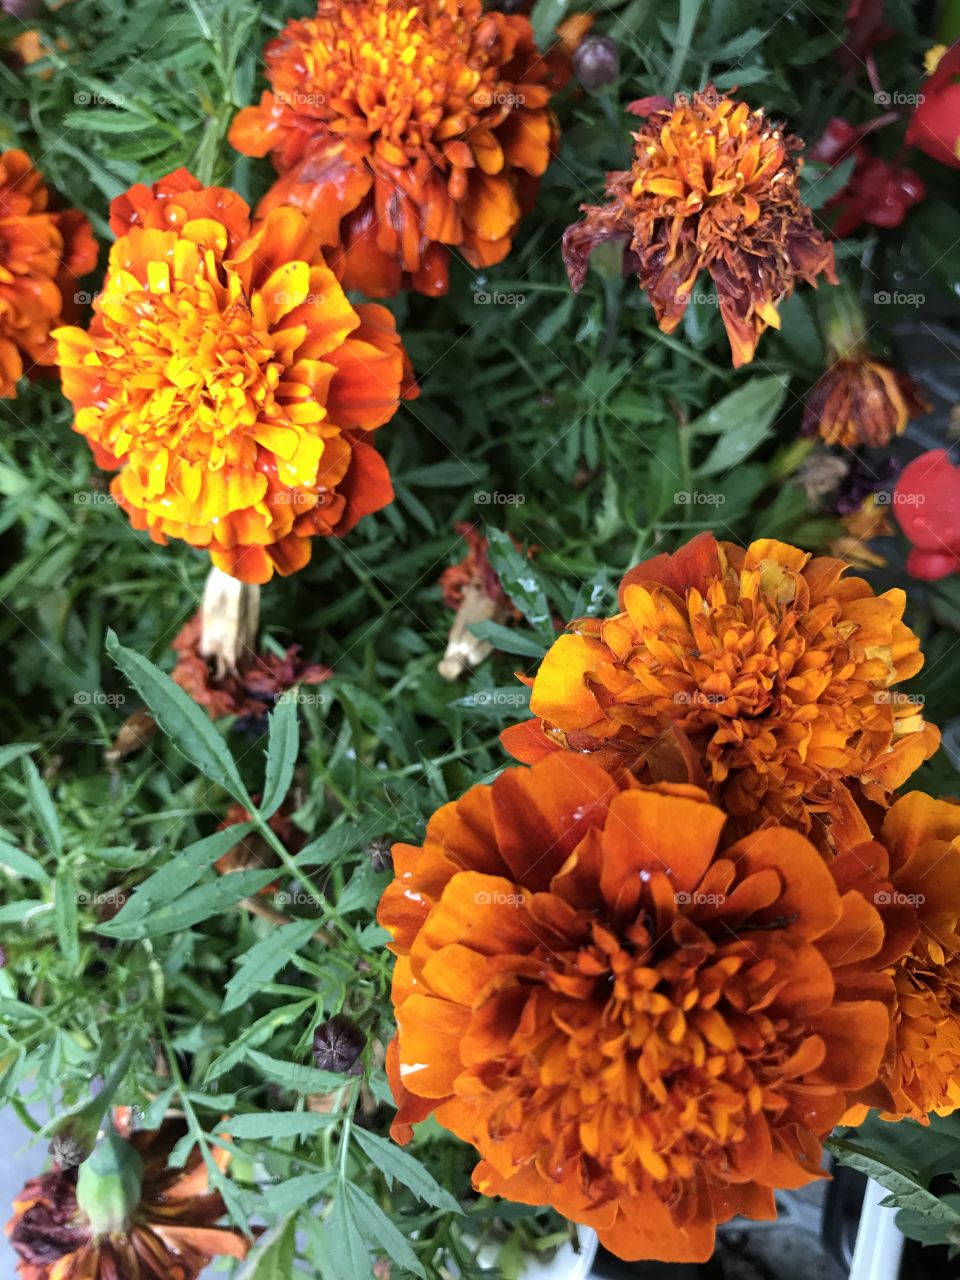 Just some orange flowers I happened to notice.